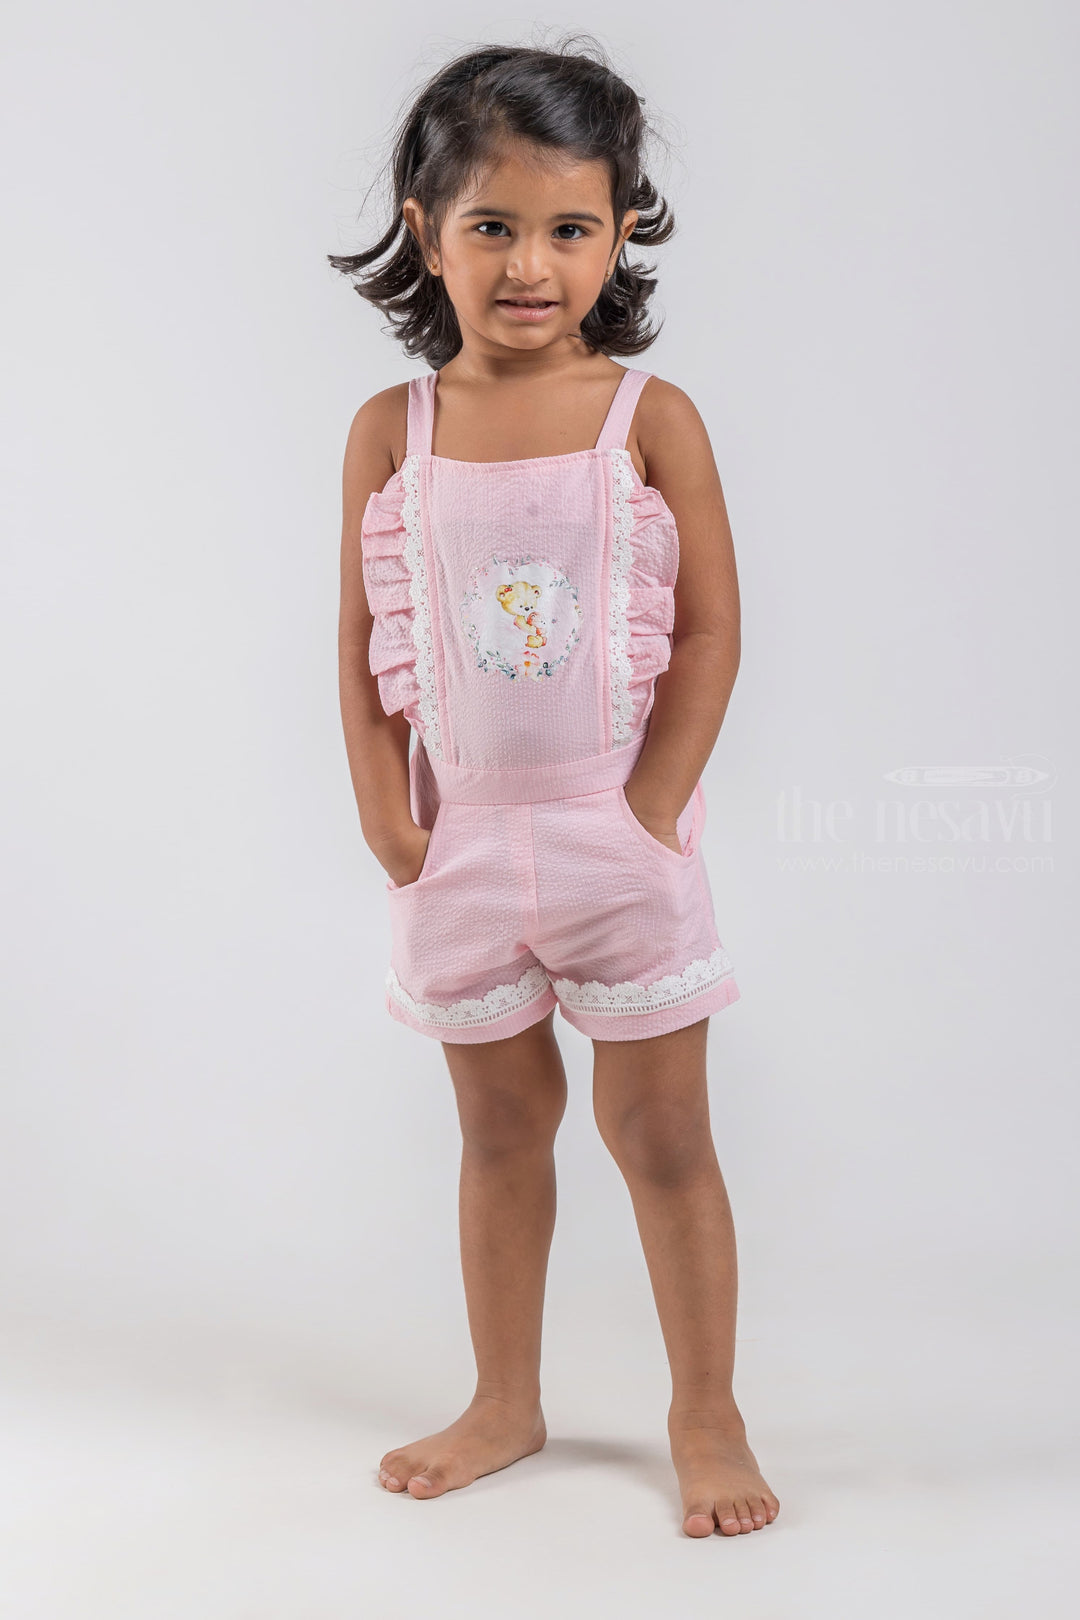 The Nesavu Baby Dungarees Cute Teddy Bear Printed Sleeveless Pink Top and Pink Trouser Set for Baby Girls psr silks Nesavu 14 (6M) / Pink / Cotton BFJ406C